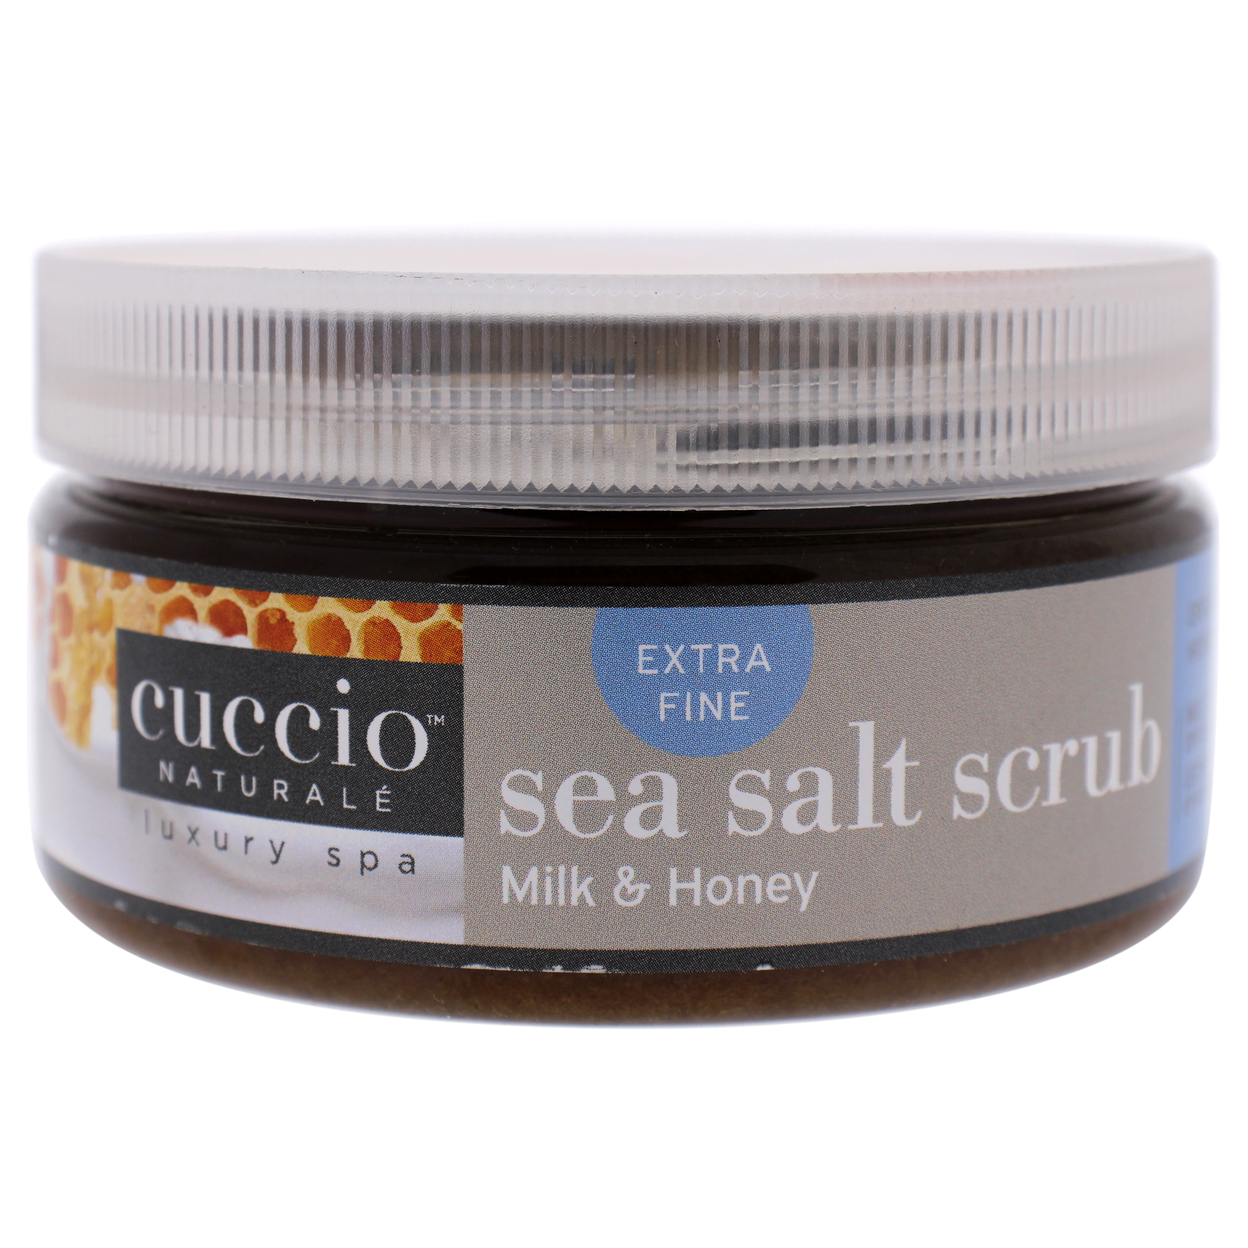 Cuccio Naturale Sea Salt Scrub - Milk And Honey 8 Oz